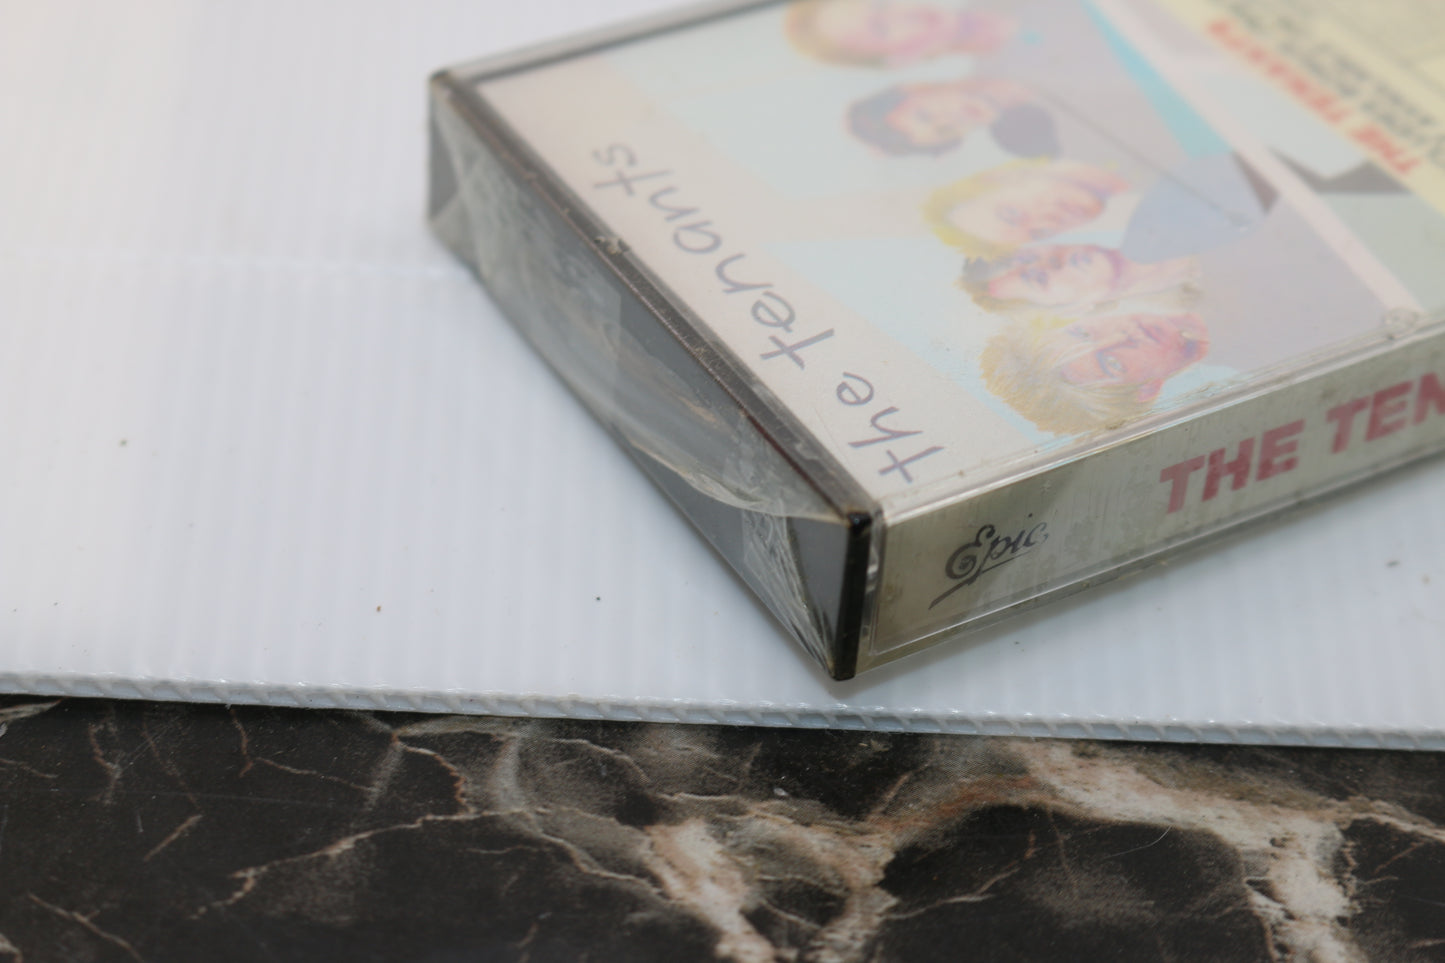 Cassette the tenants epic Sealed Brand new vintage NPECT 80076